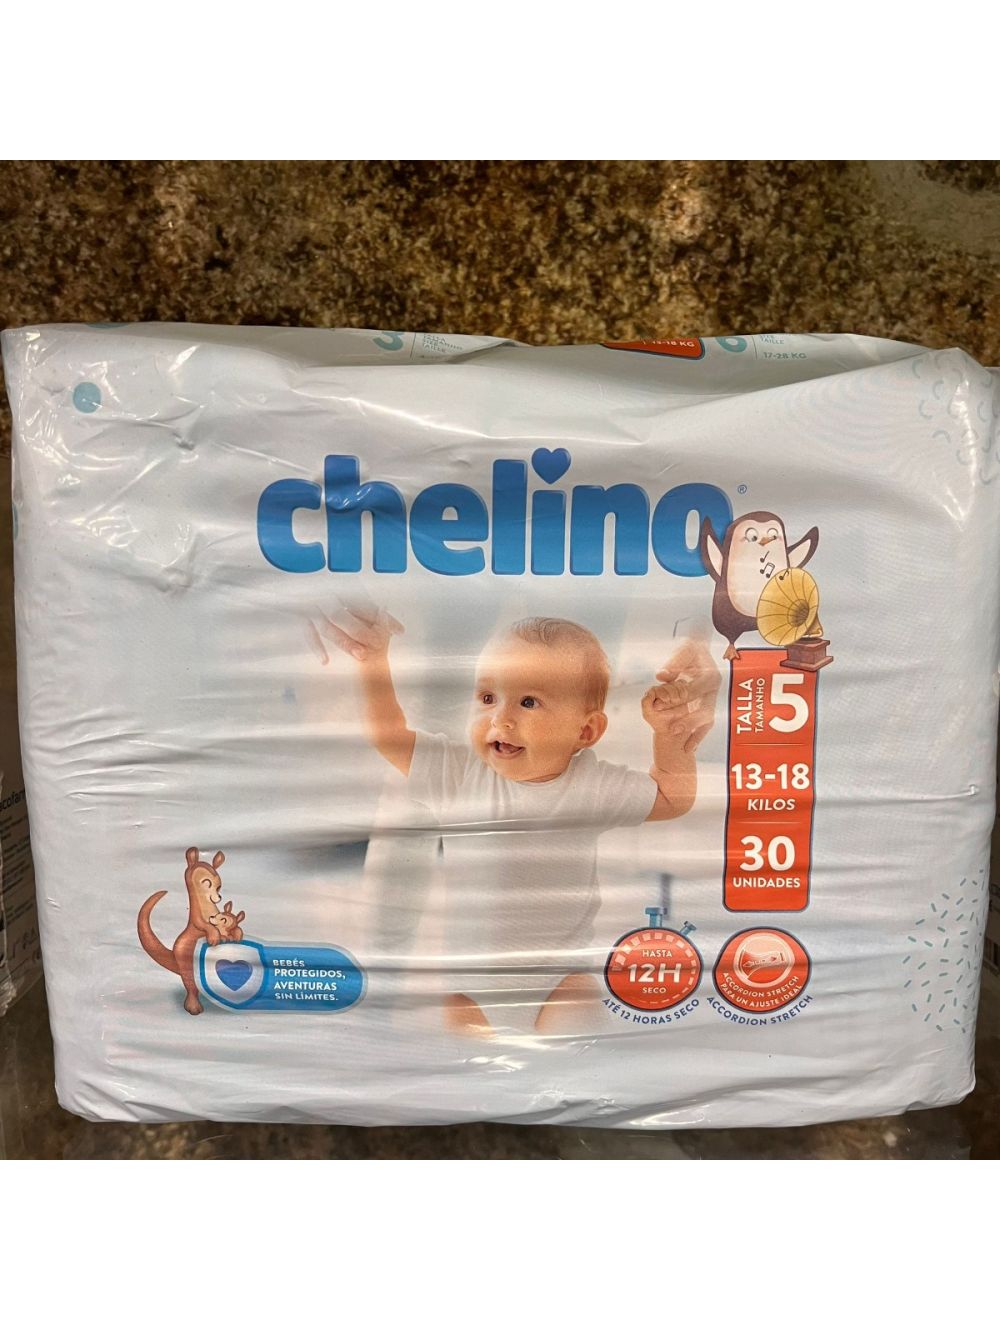 Chelino pañal infantil talla 6 27 unidades bebes